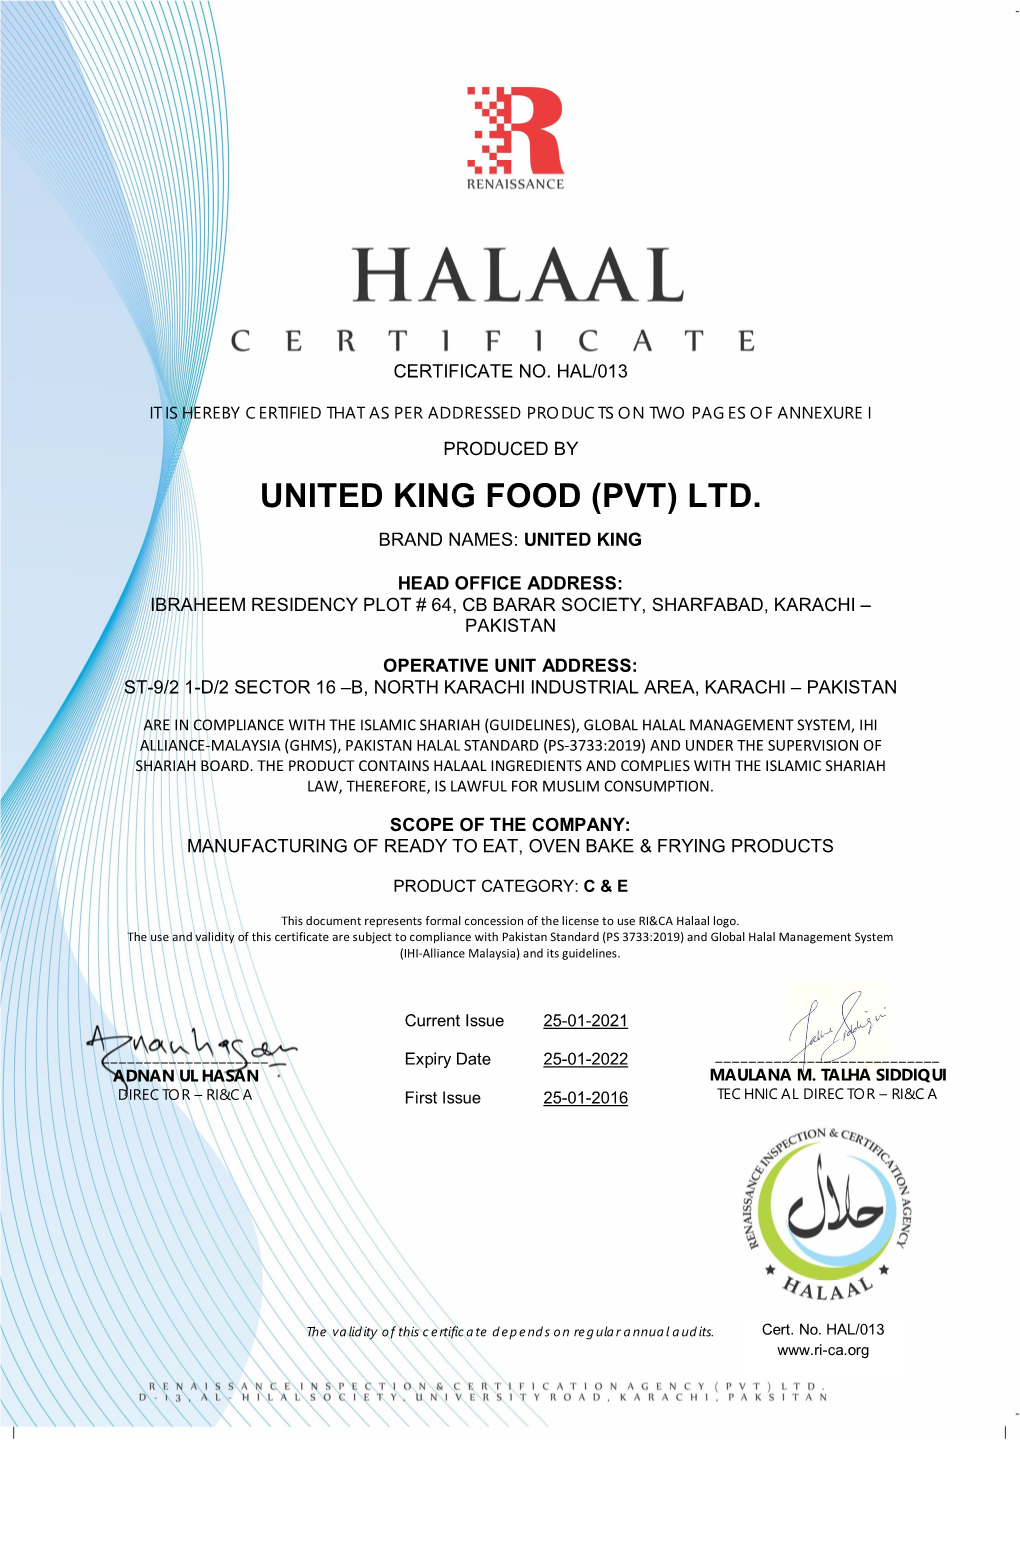 United King Food (Pvt) Ltd